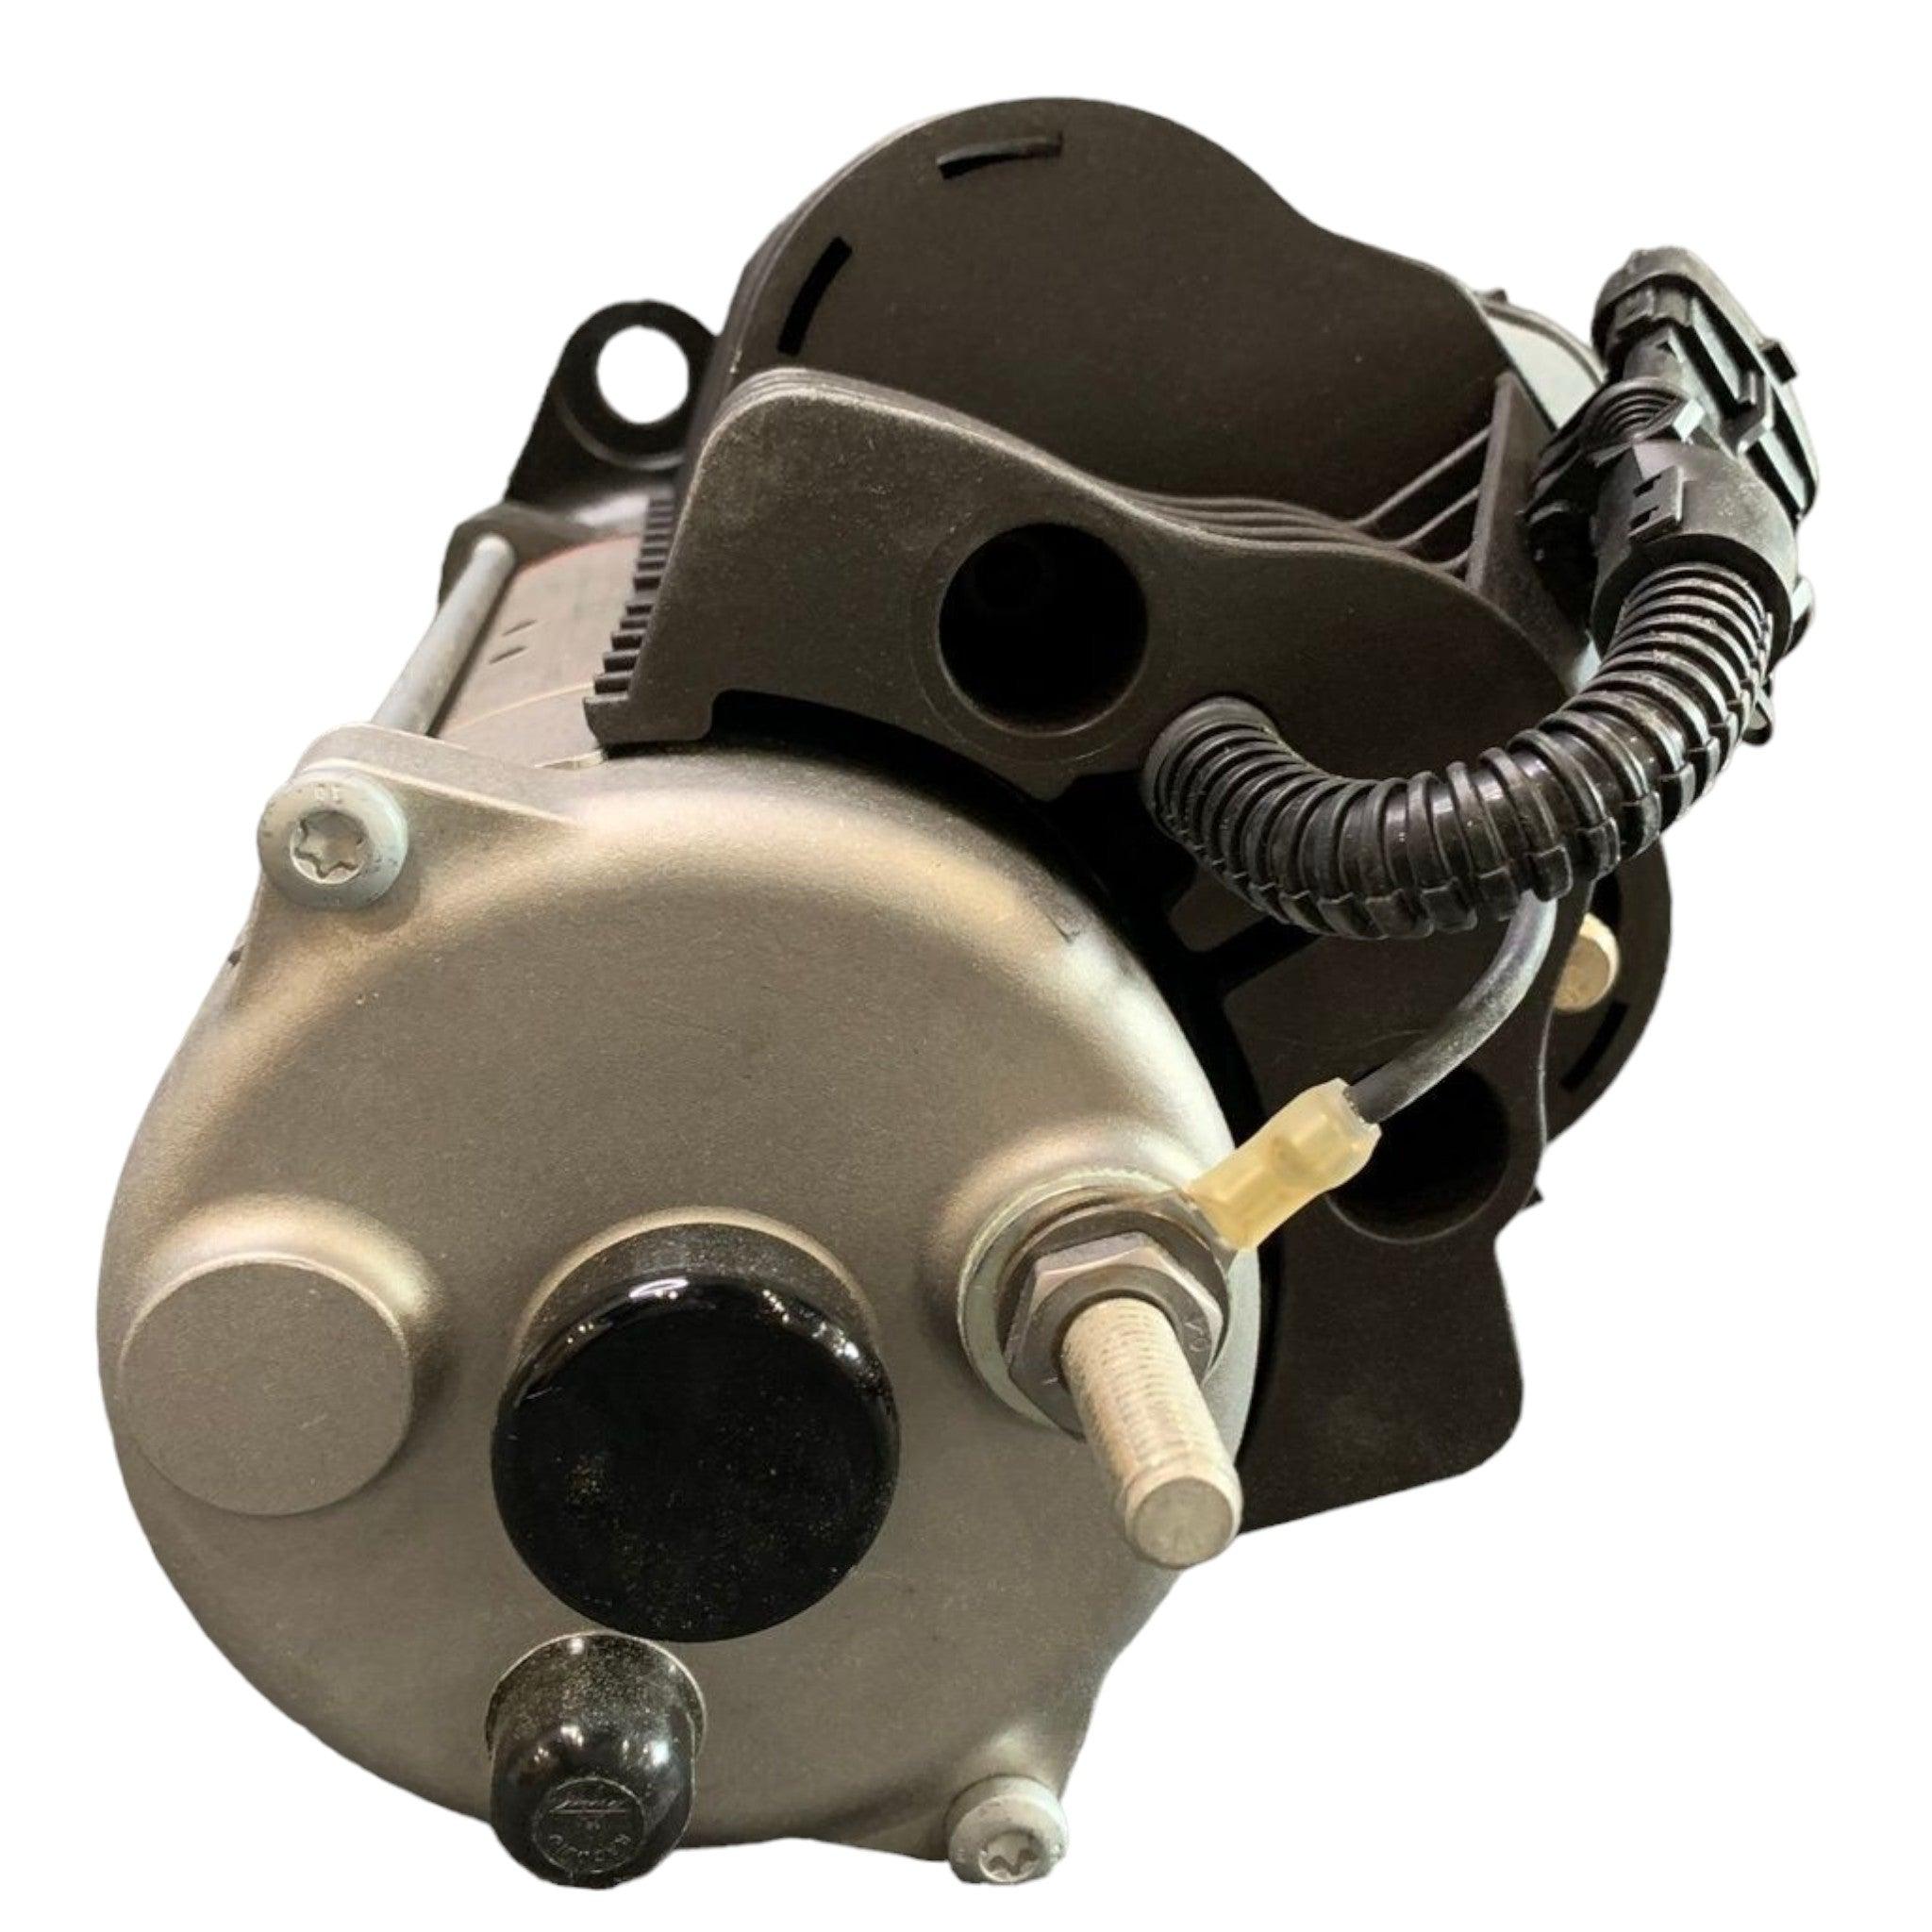 0-001-340-501 Genuine Bosch Starter Motor 24V - ADVANCED TRUCK PARTS